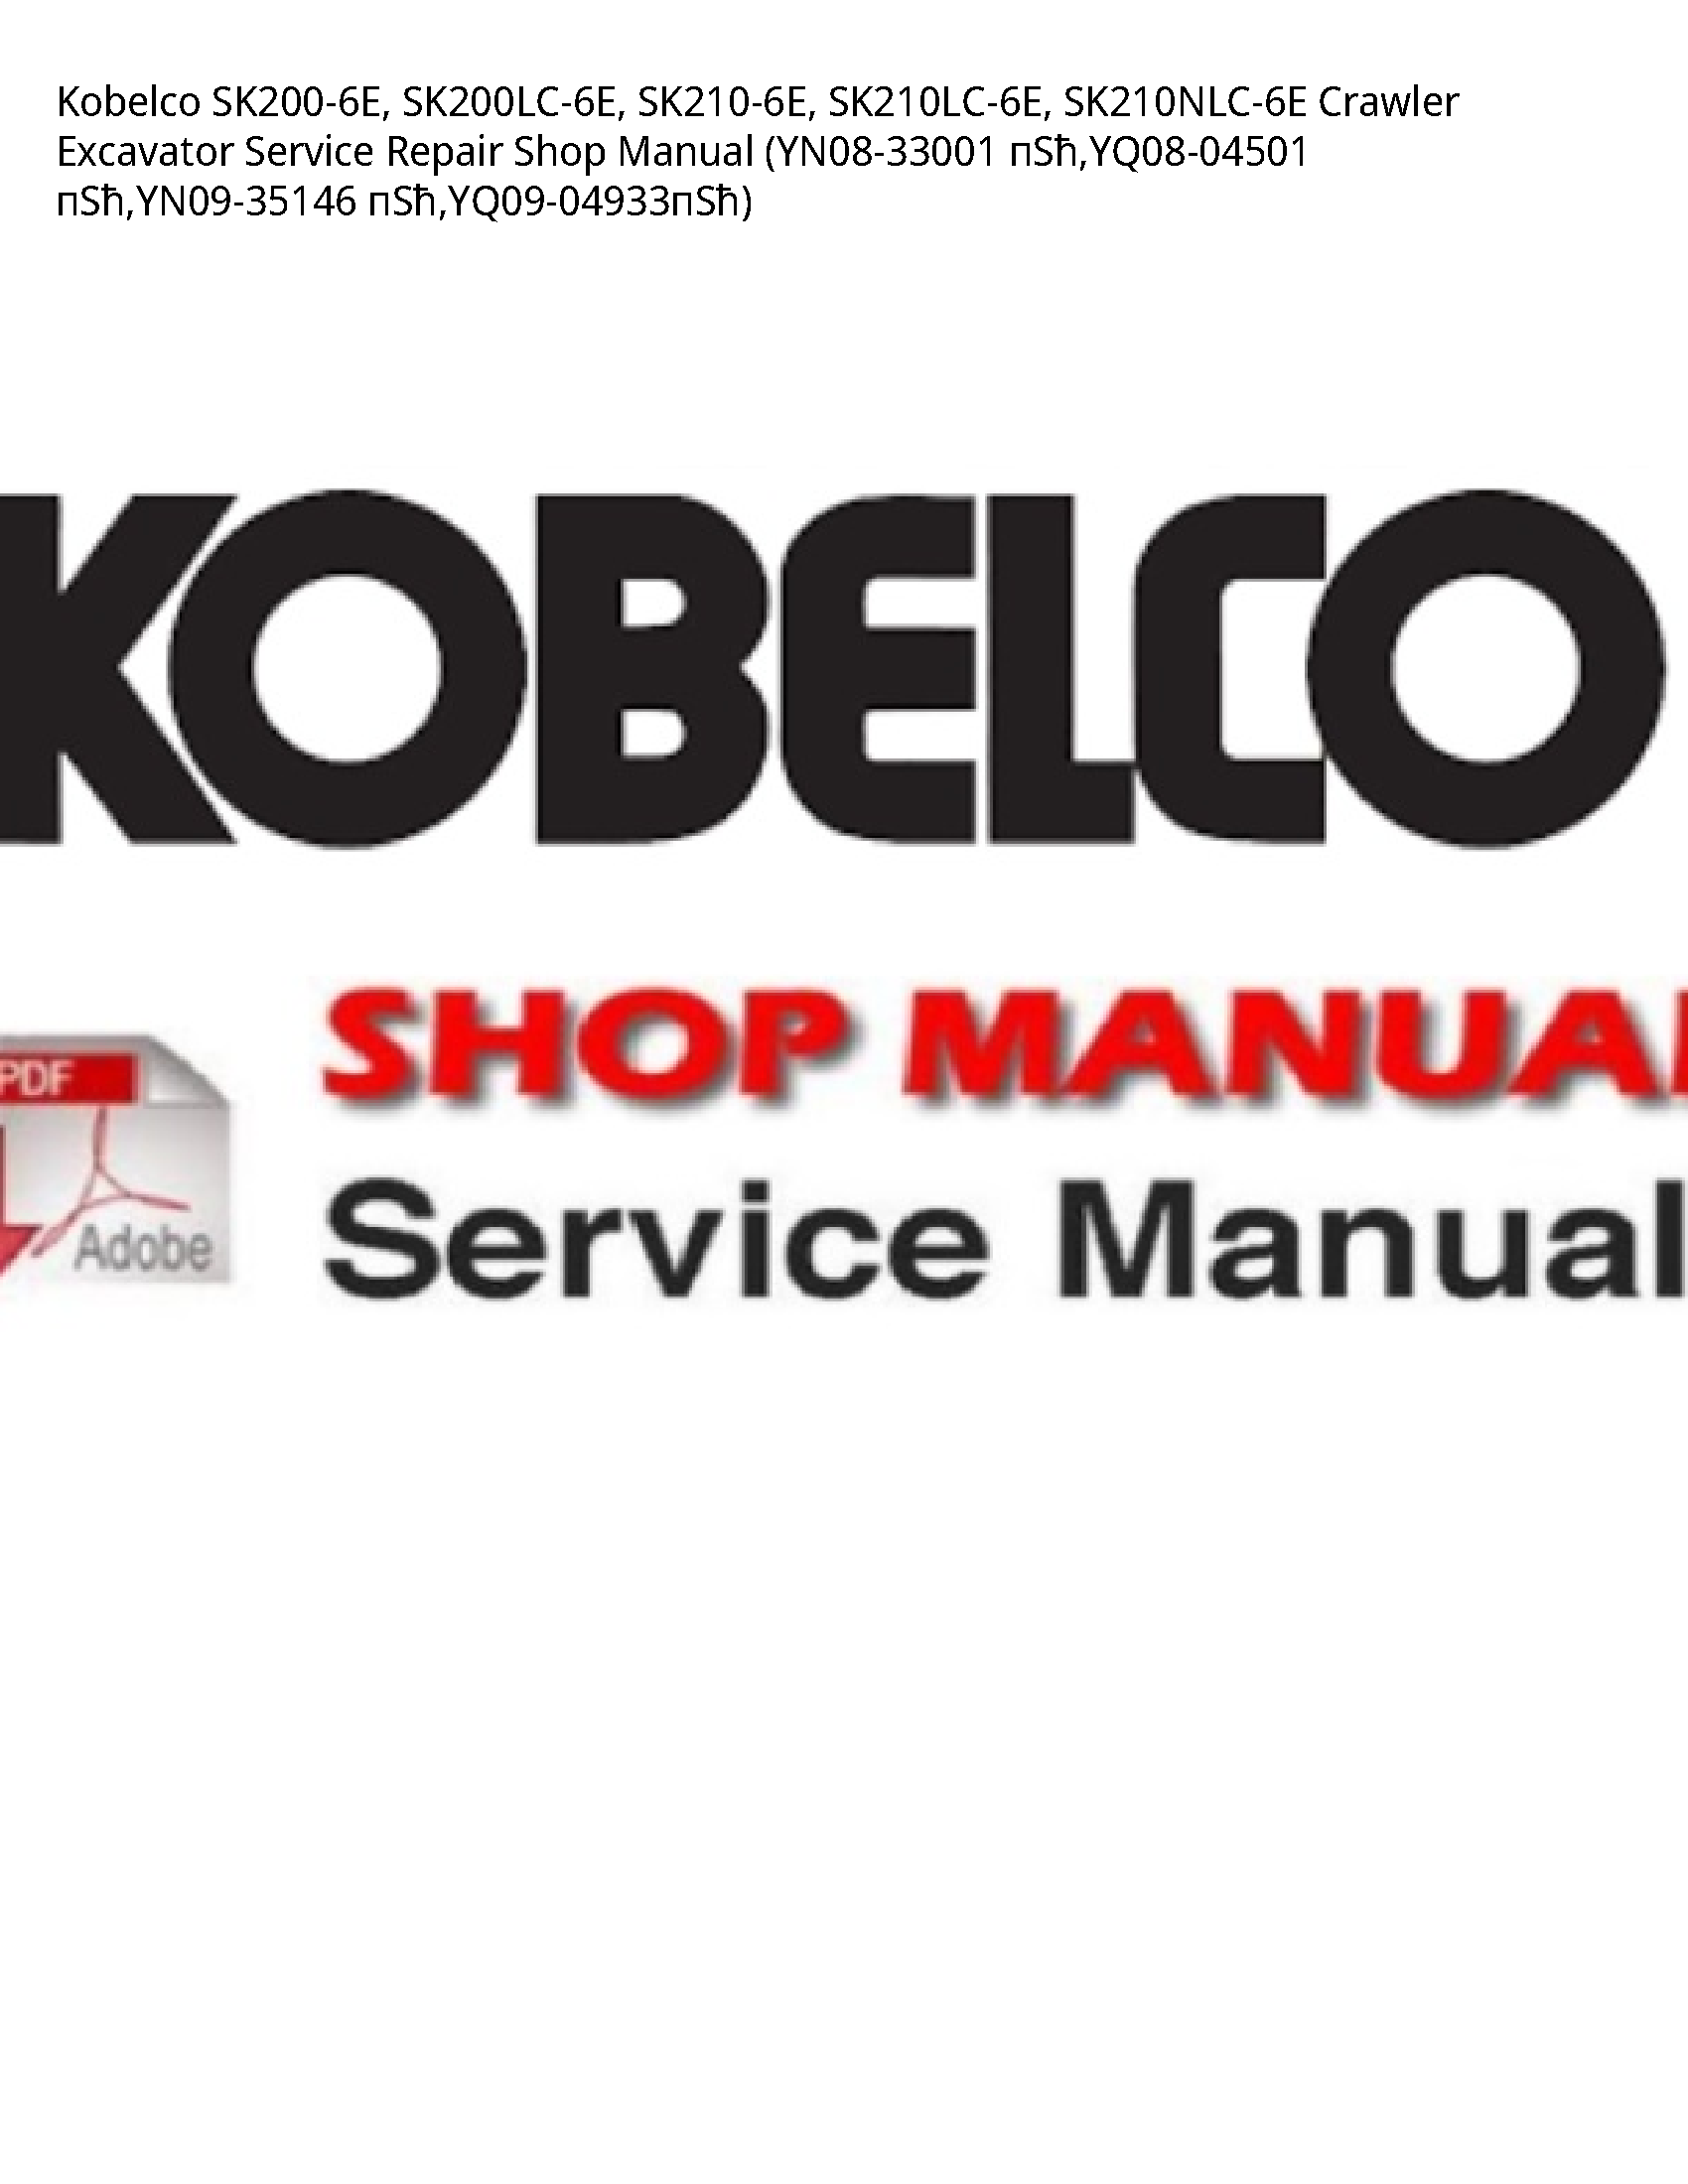 Kobelco SK200-6E Crawler Excavator manual